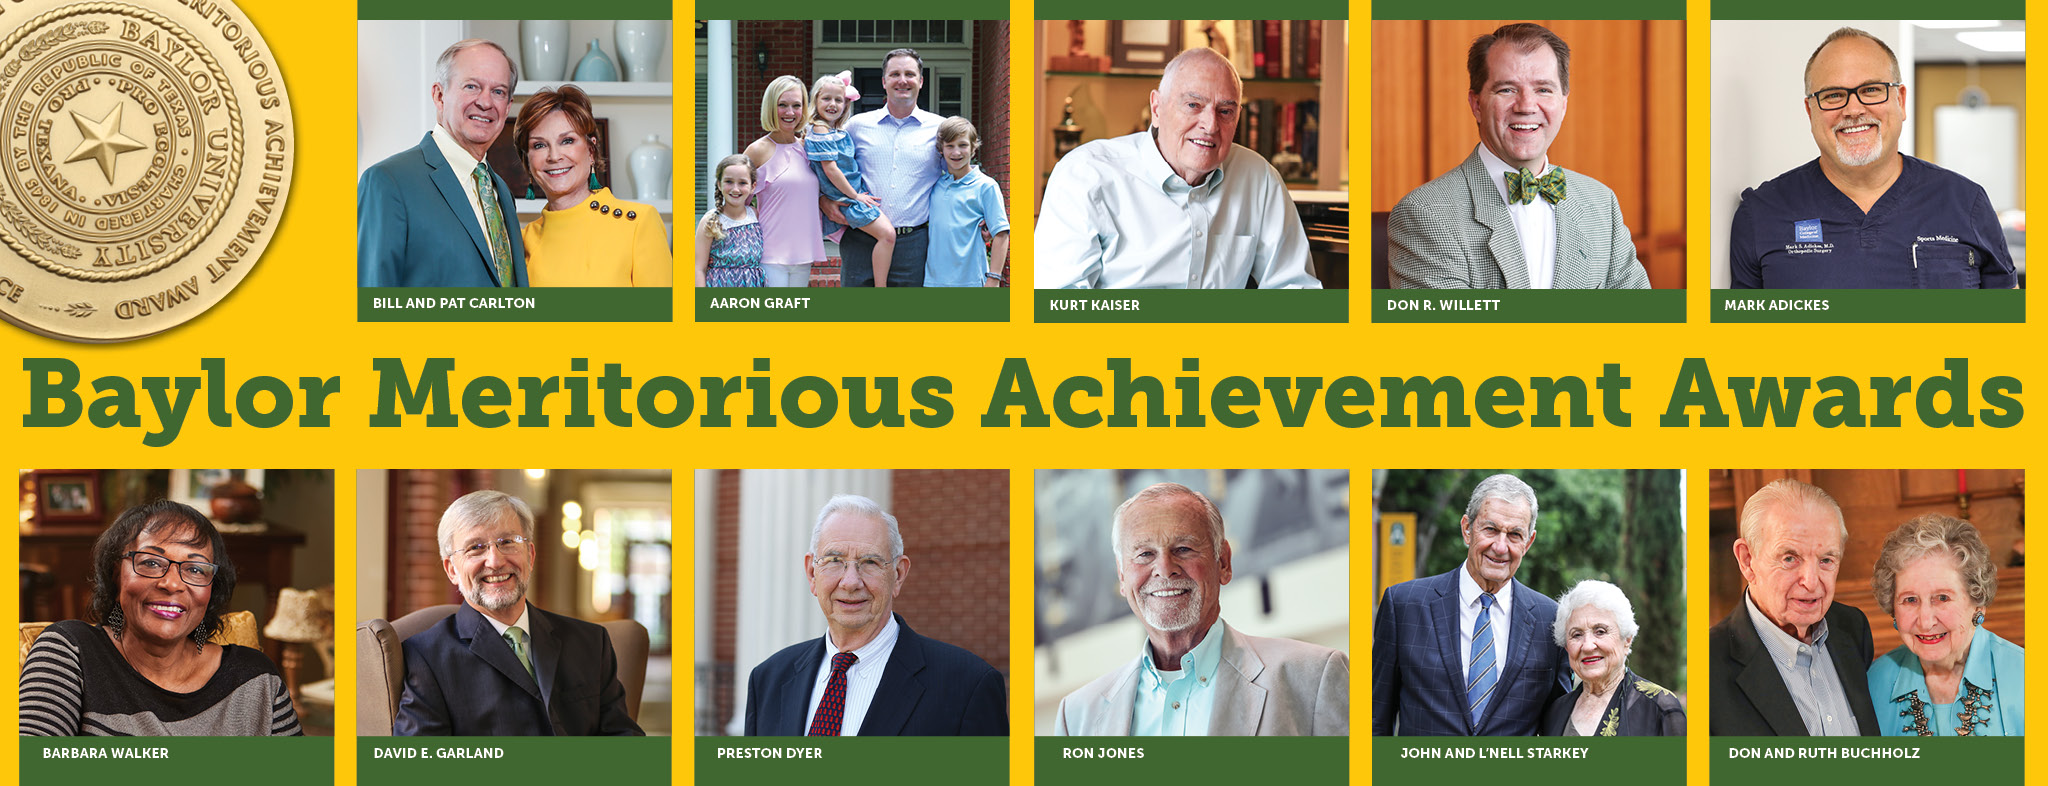 2017-18 Baylor Meritorious Achievement Award winners